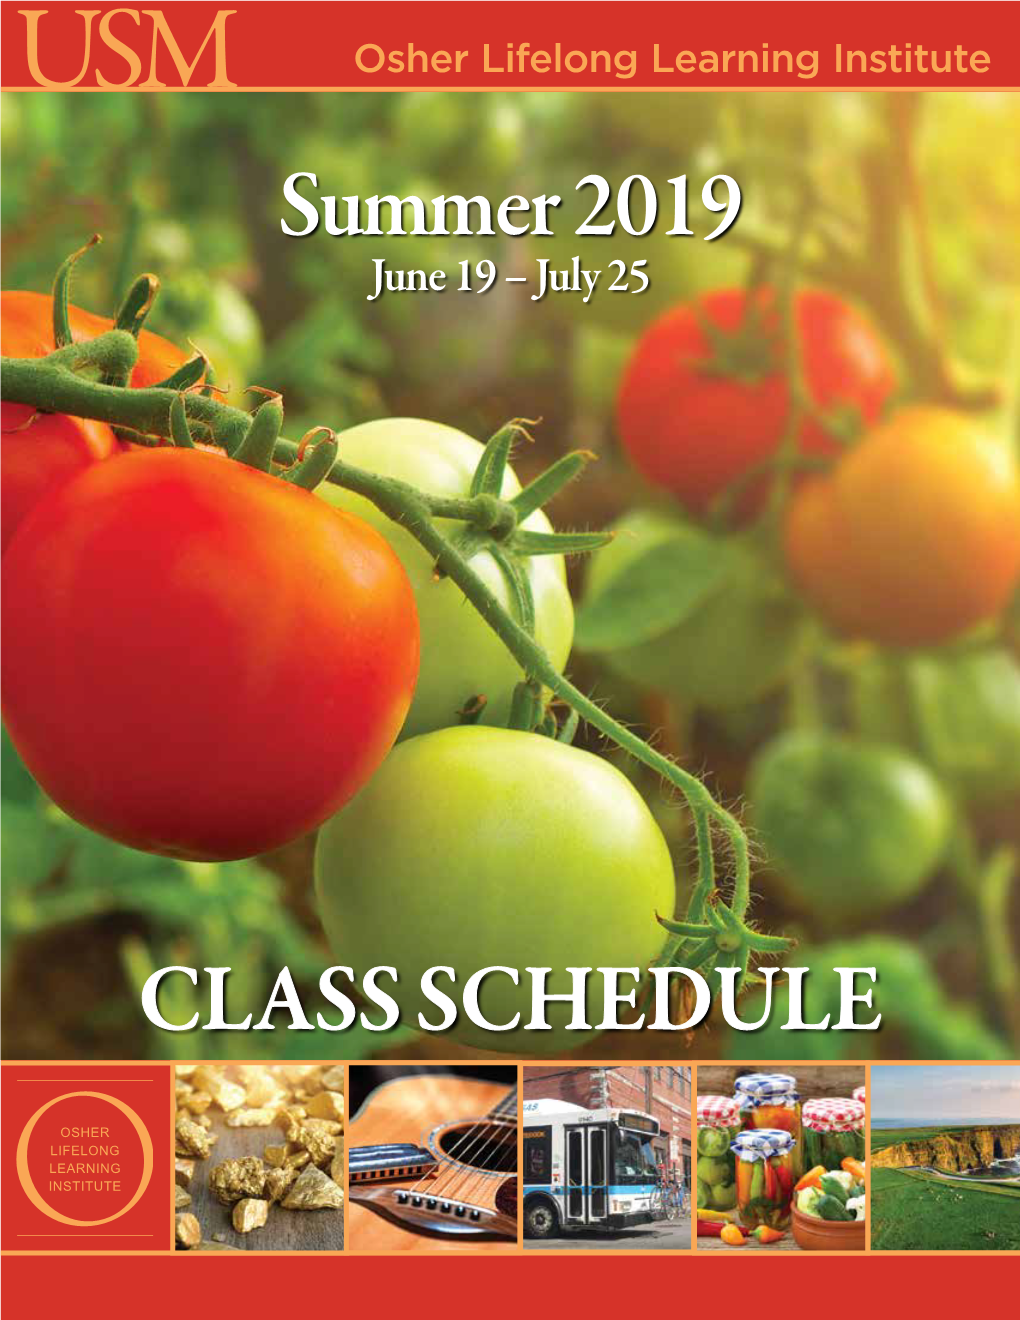 OLLI Summer 2019 Catalog